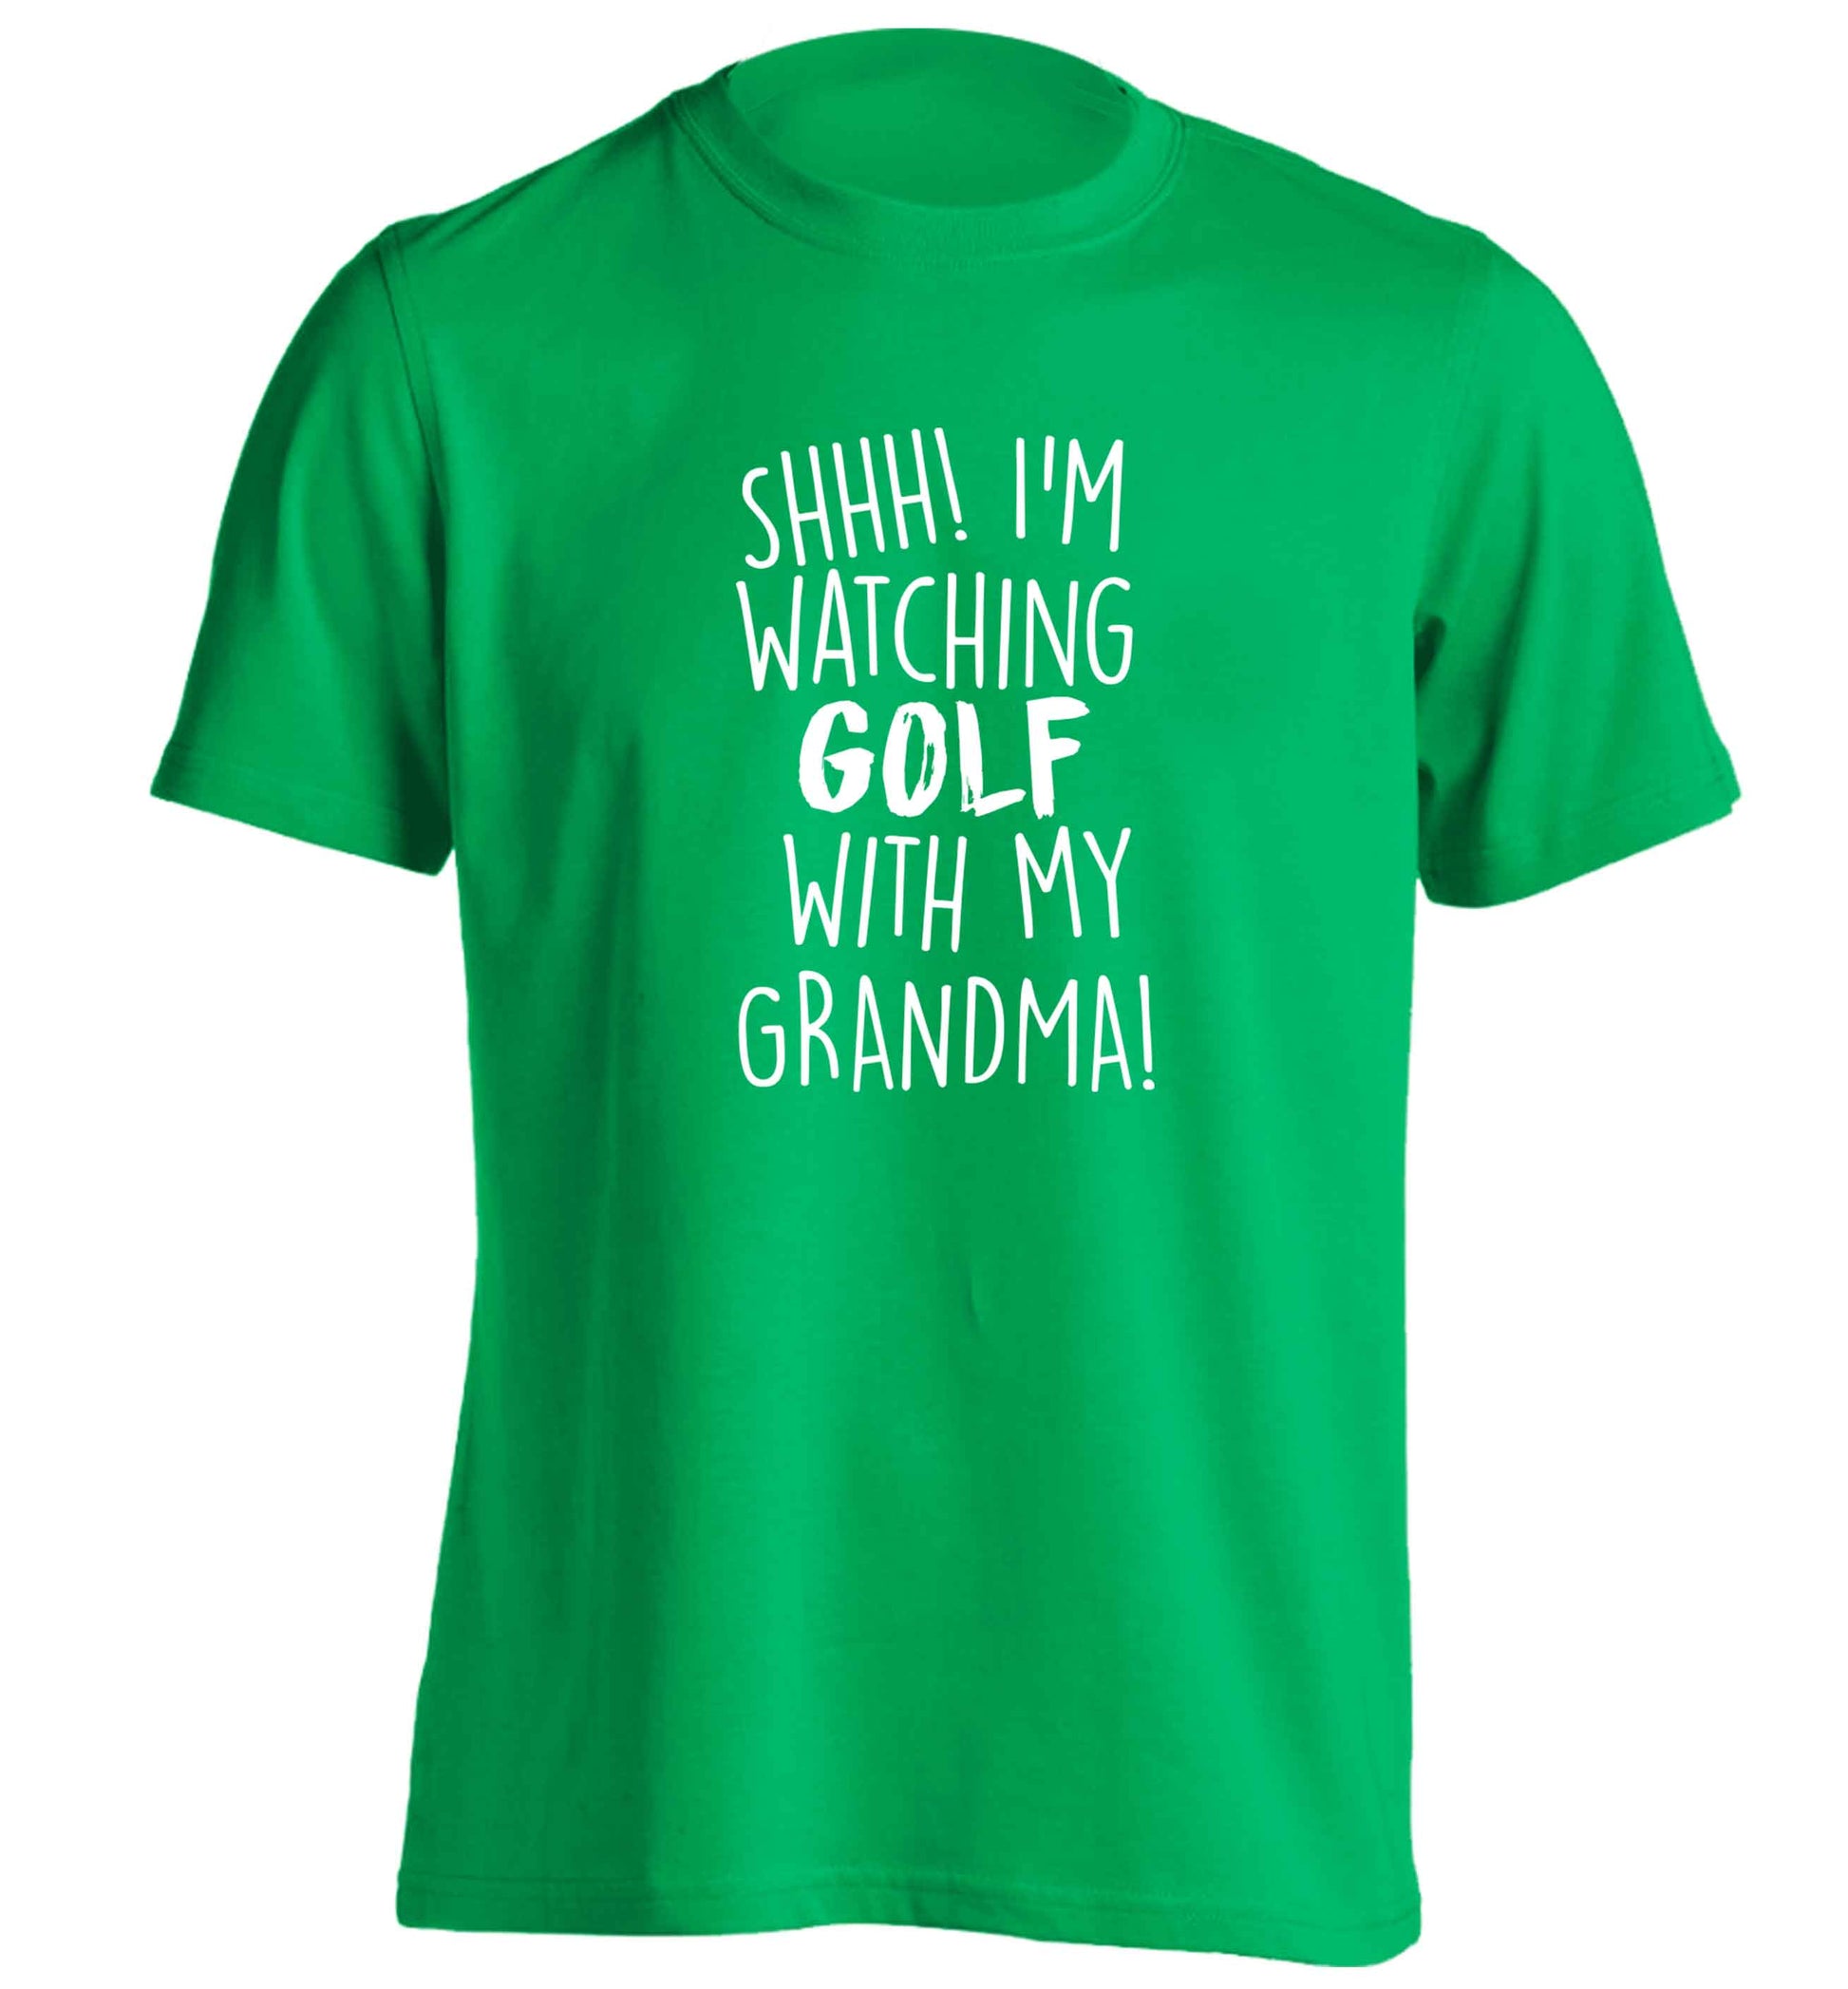 Shh I'm watching golf with my grandma adults unisex green Tshirt 2XL